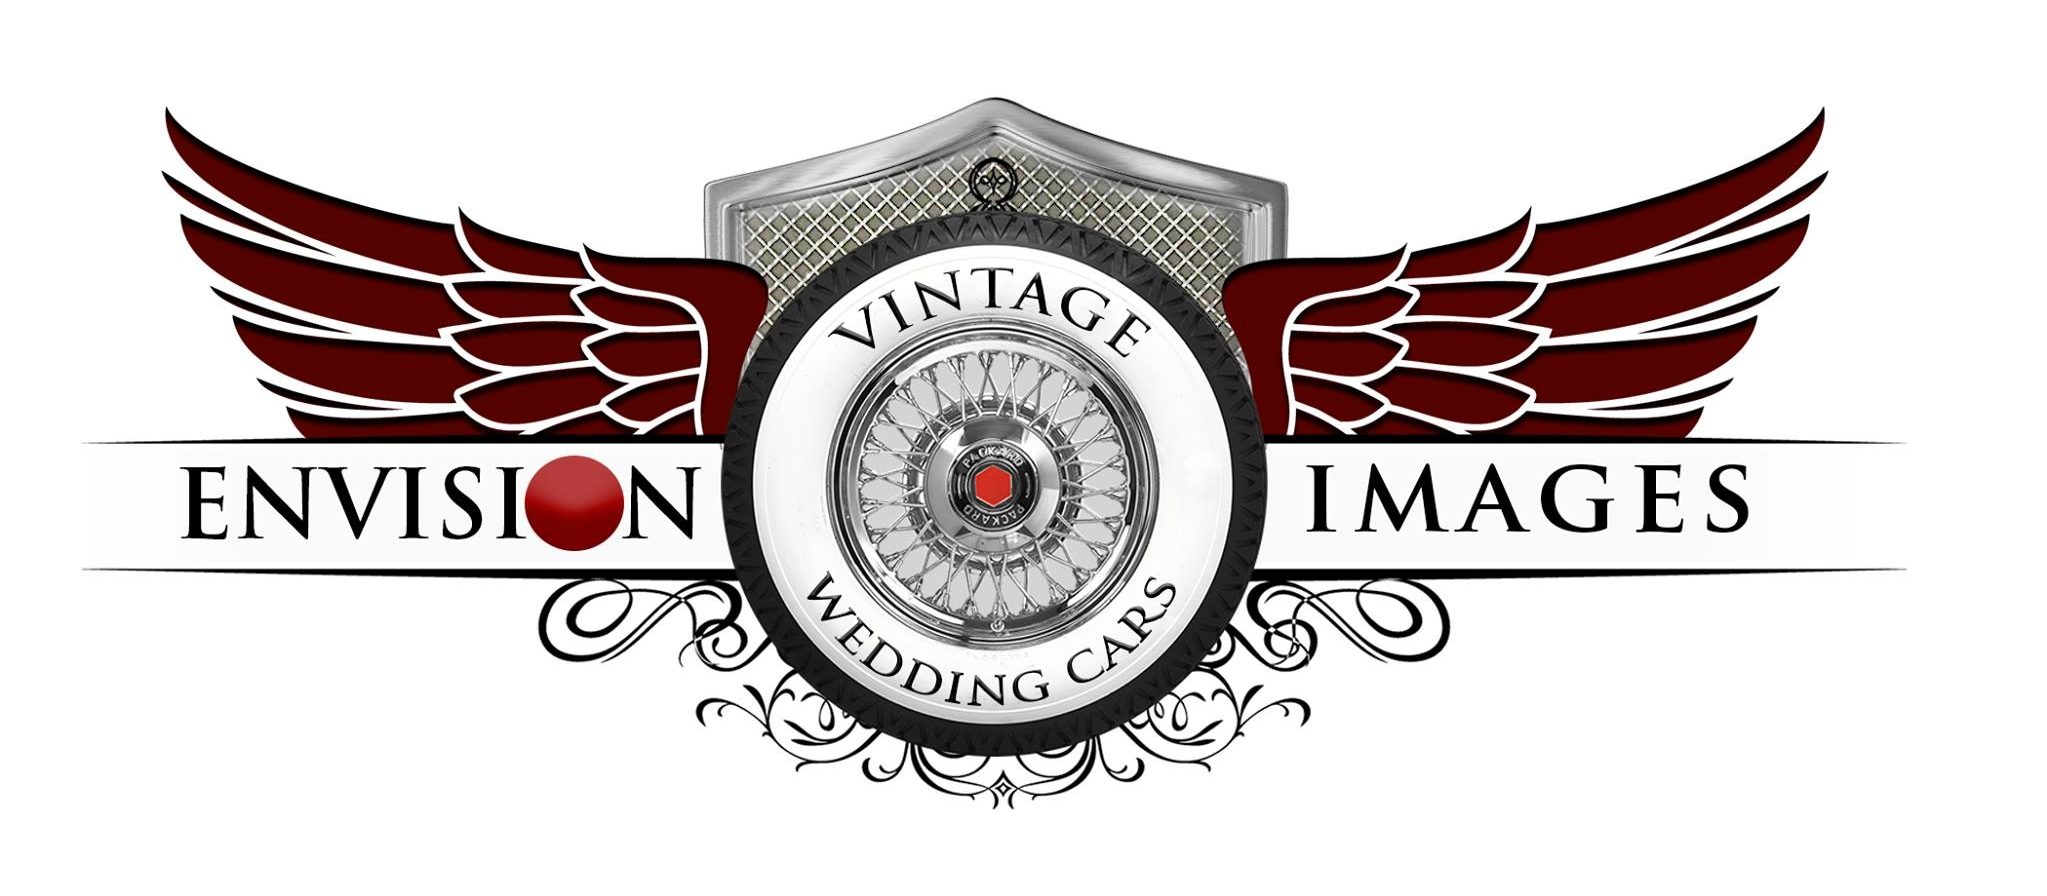 Envision Vintage Wedding Cars